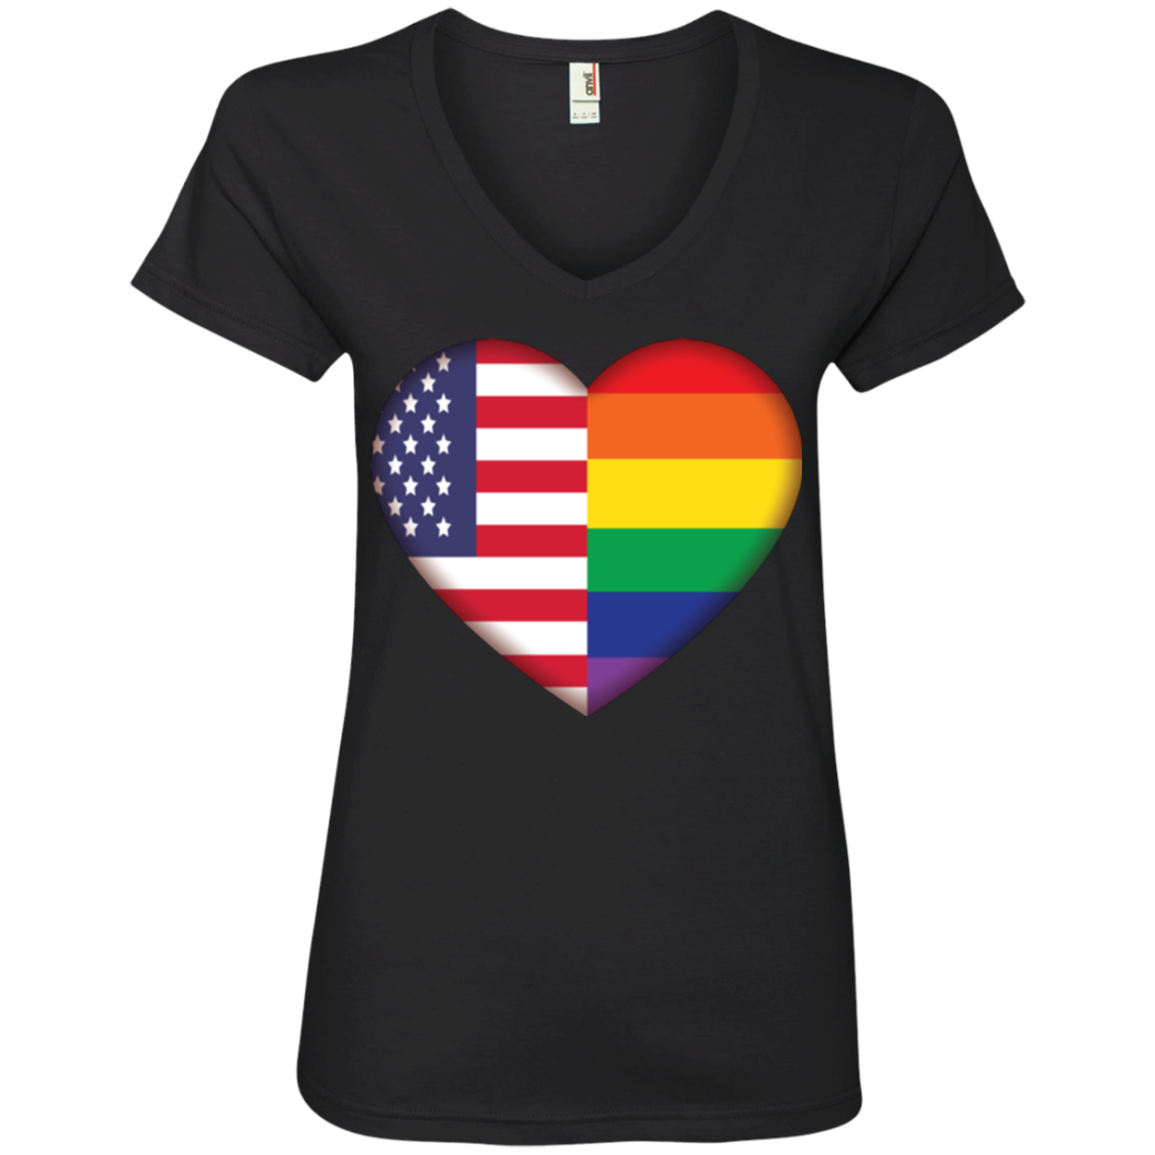 Gay Pride USA Flag Love v-neck black women Shirt LGBT Pride USA Flag tshirt for women